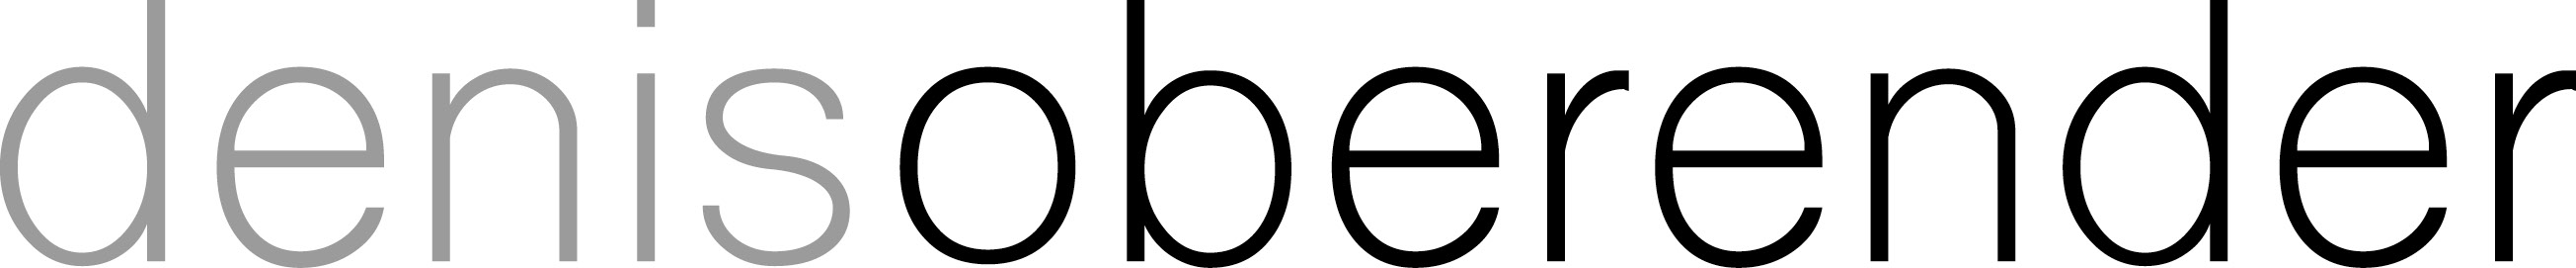 denisoberender-logo